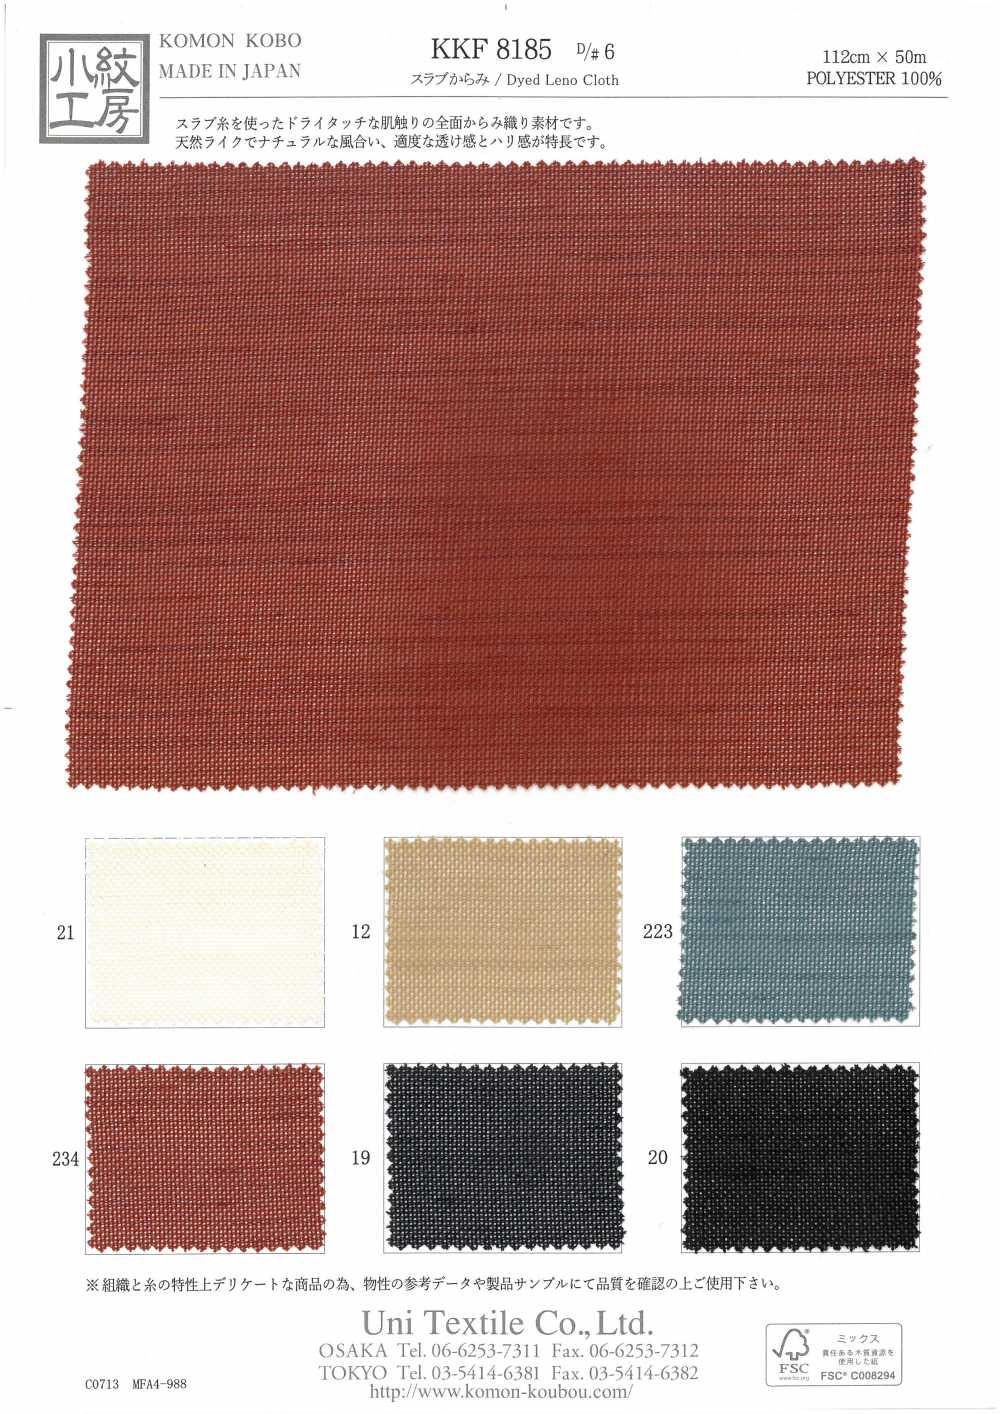 KKF8185-D/6 From The Slab[Textile / Fabric] Uni Textile